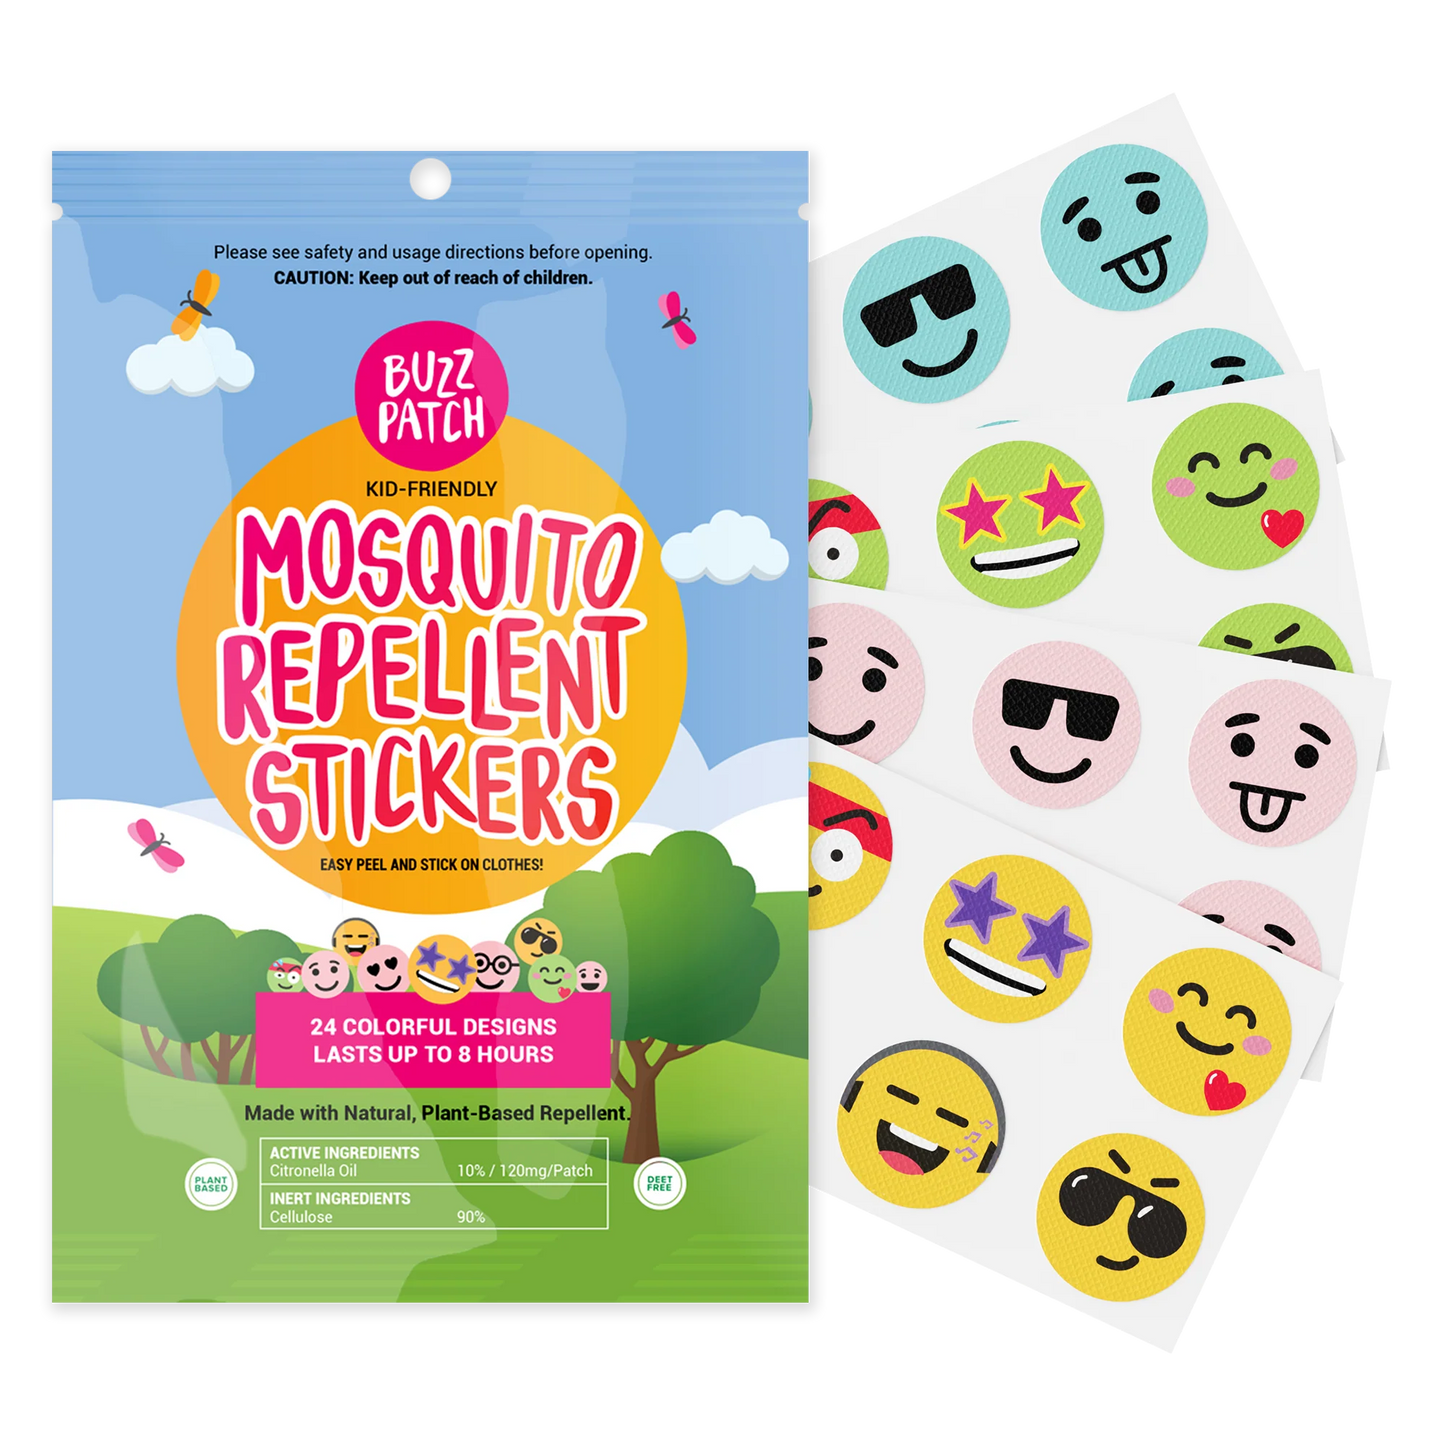 Mosquito repellent stickers